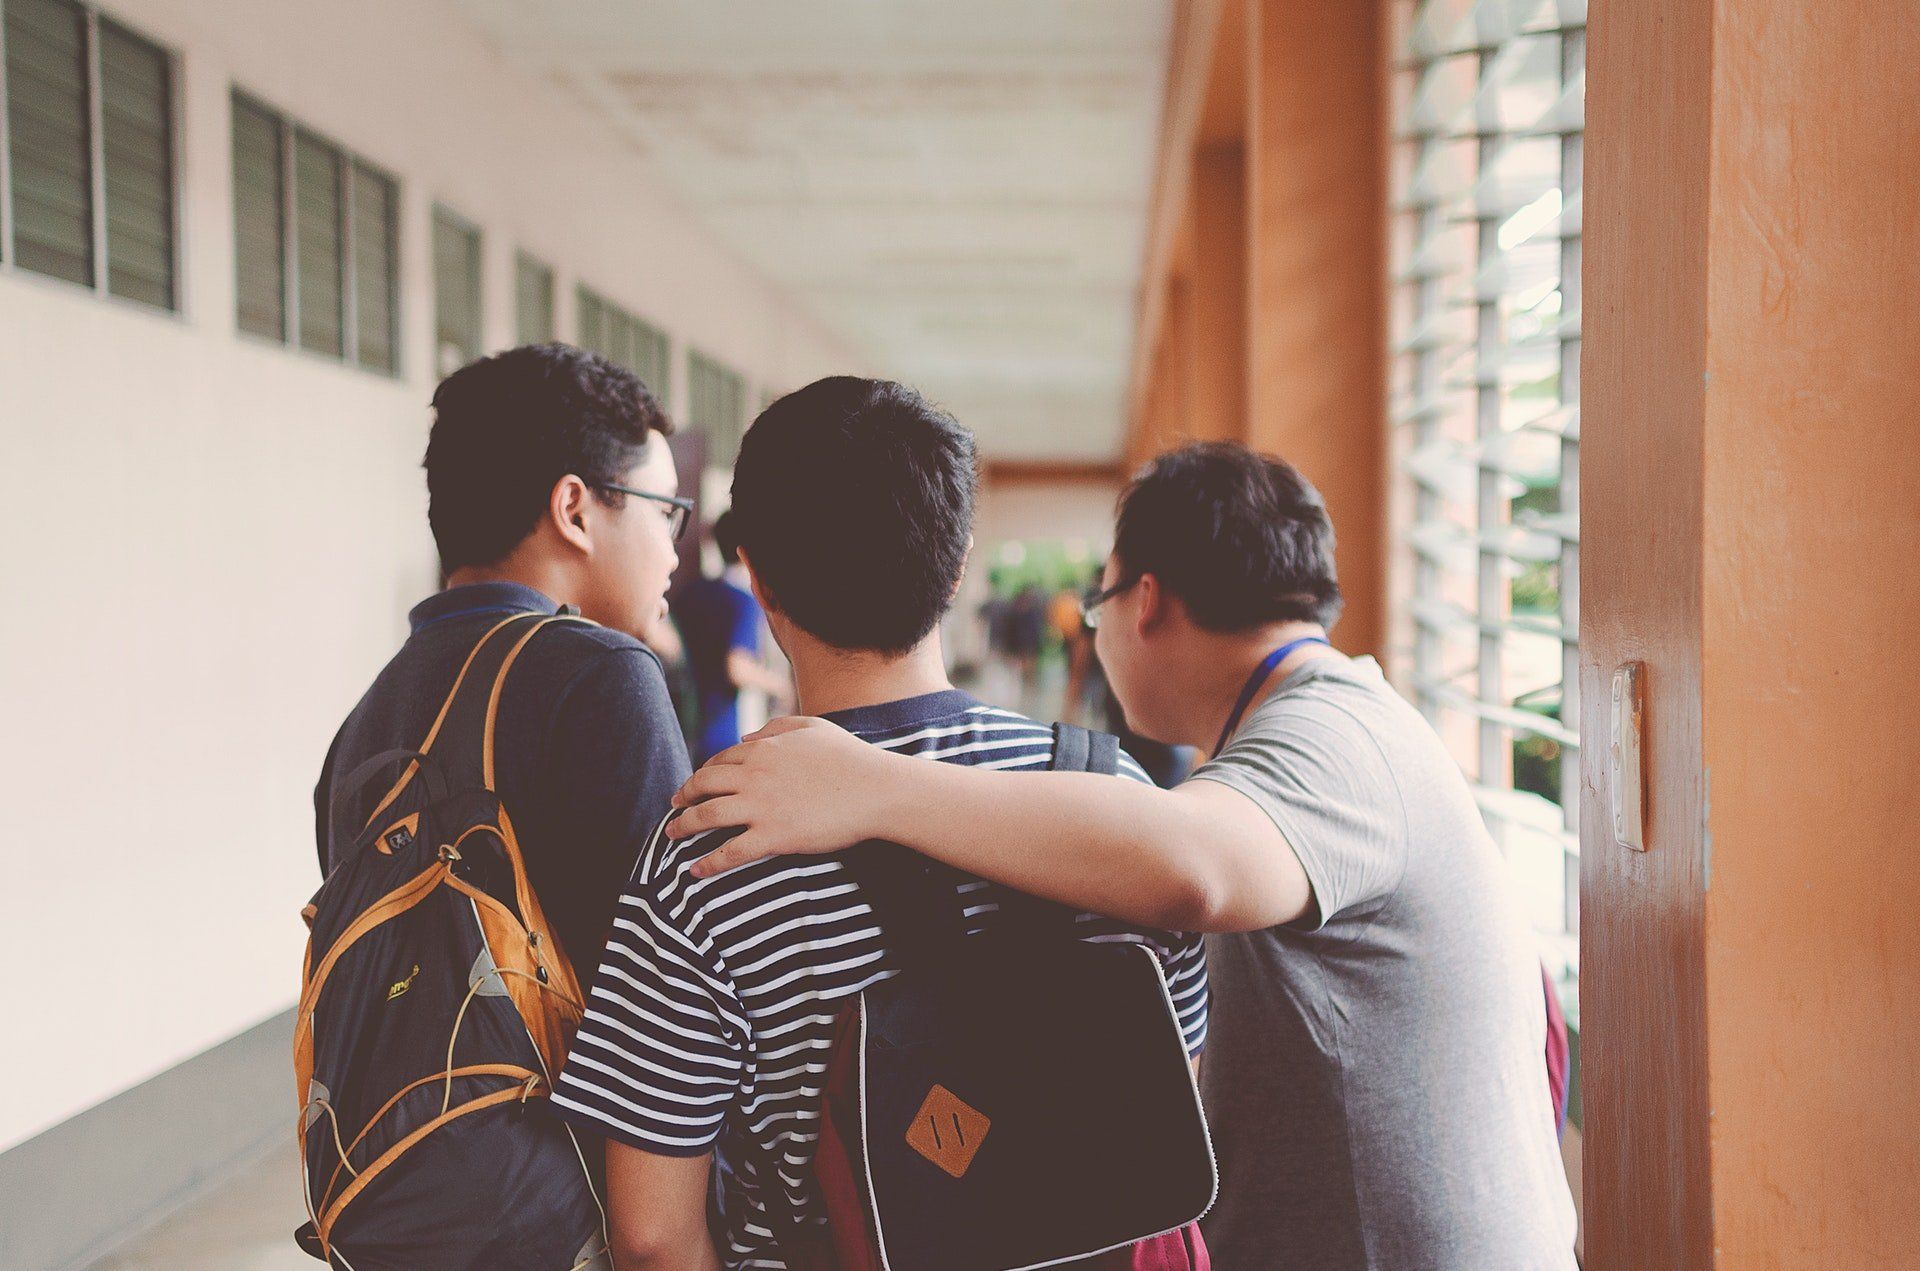 students talking in a school hallway